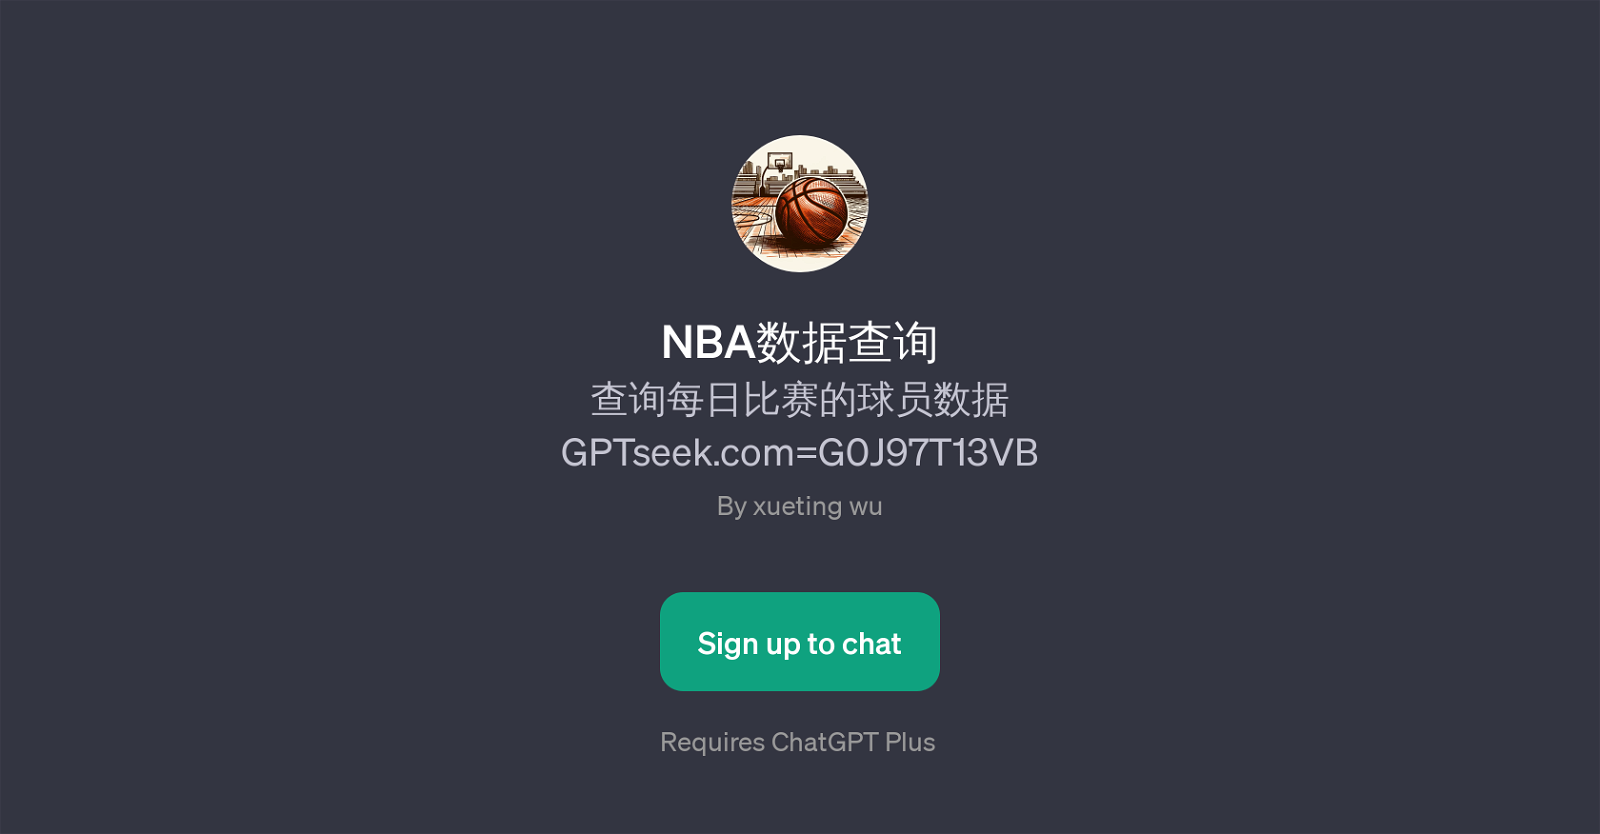 NBA website